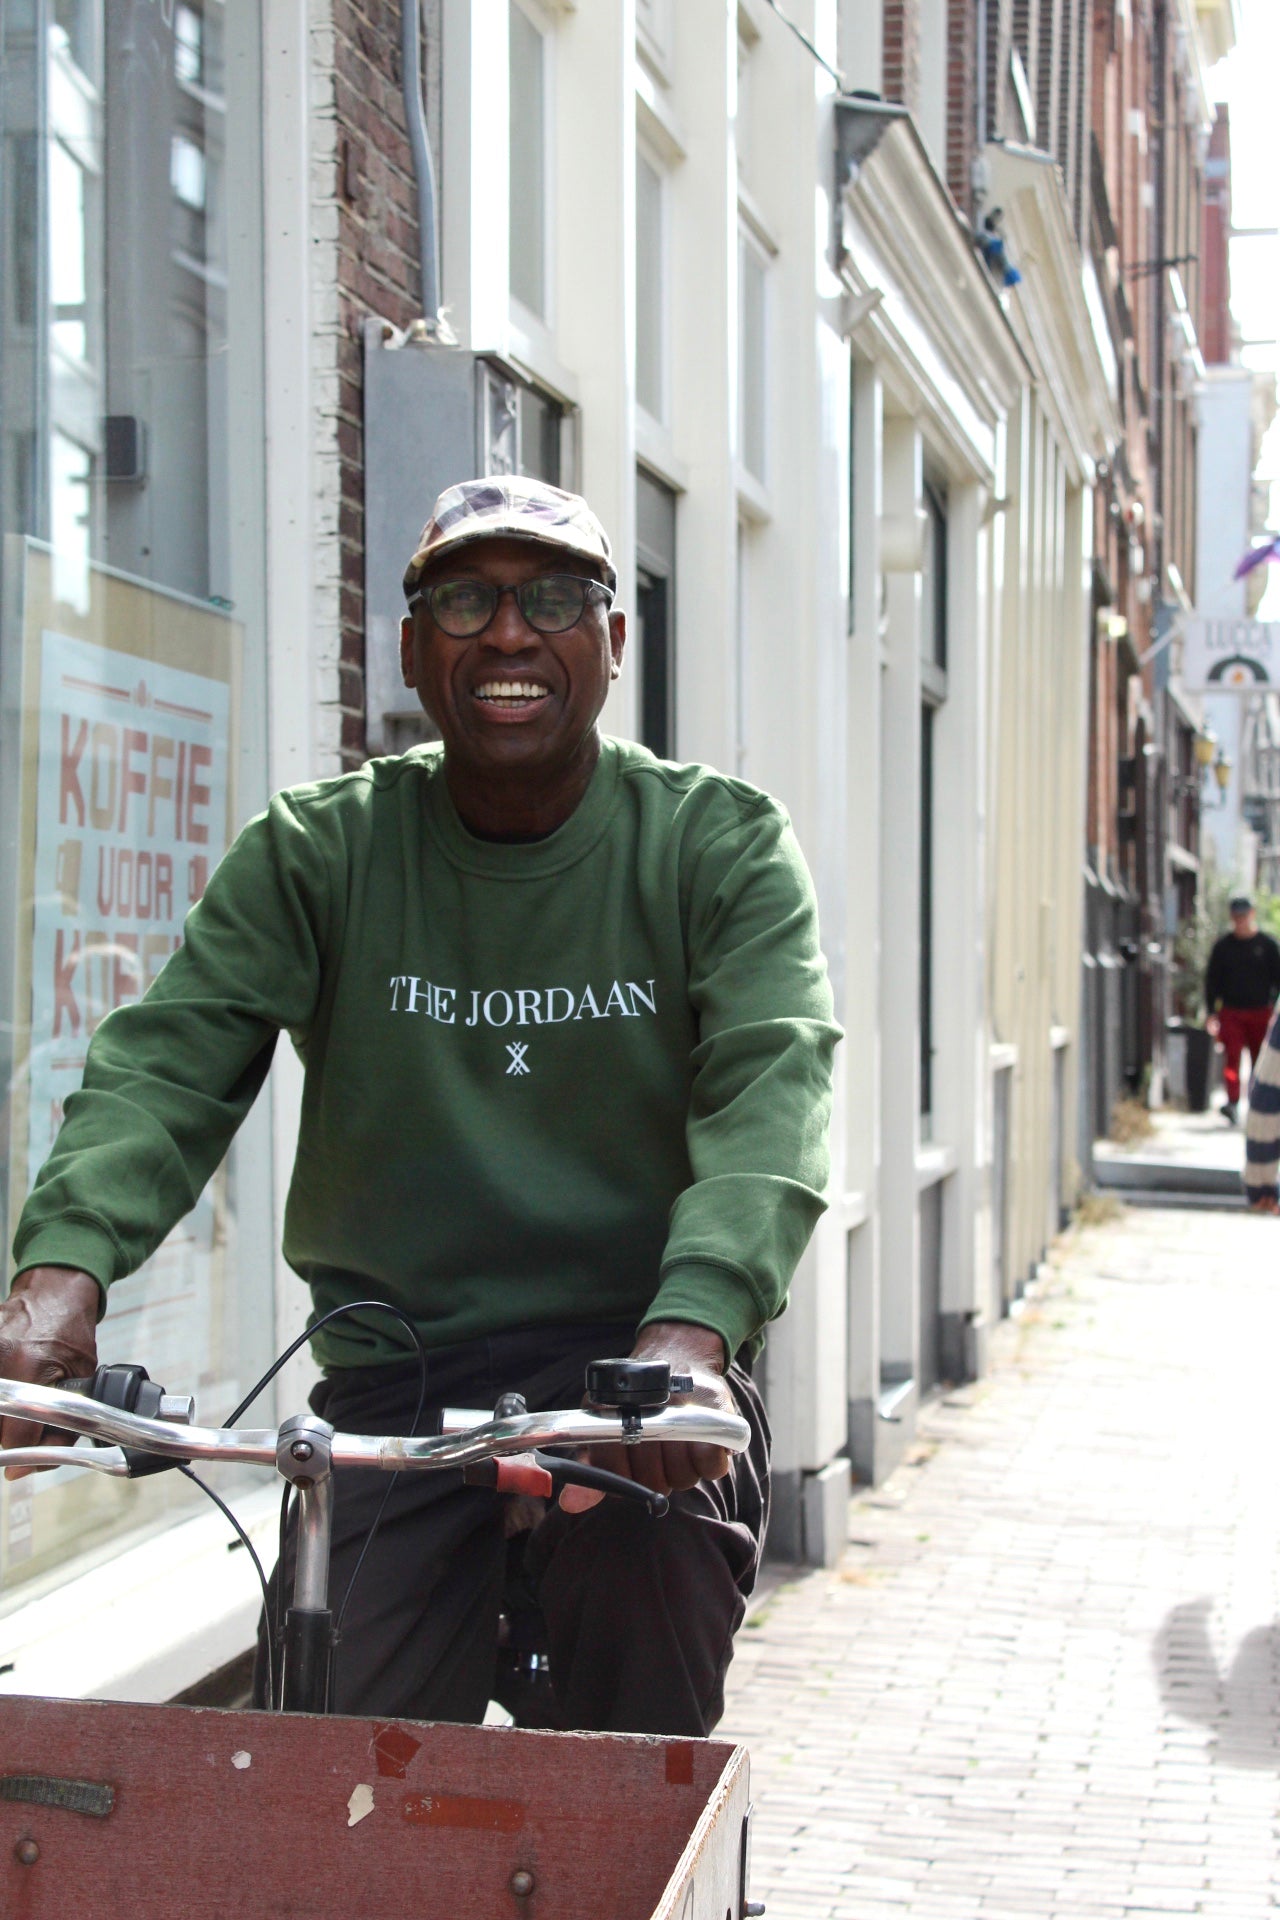 The Jordaan, a Amsterdam neighborhood with a warm heart for their (homeless) neighbor.